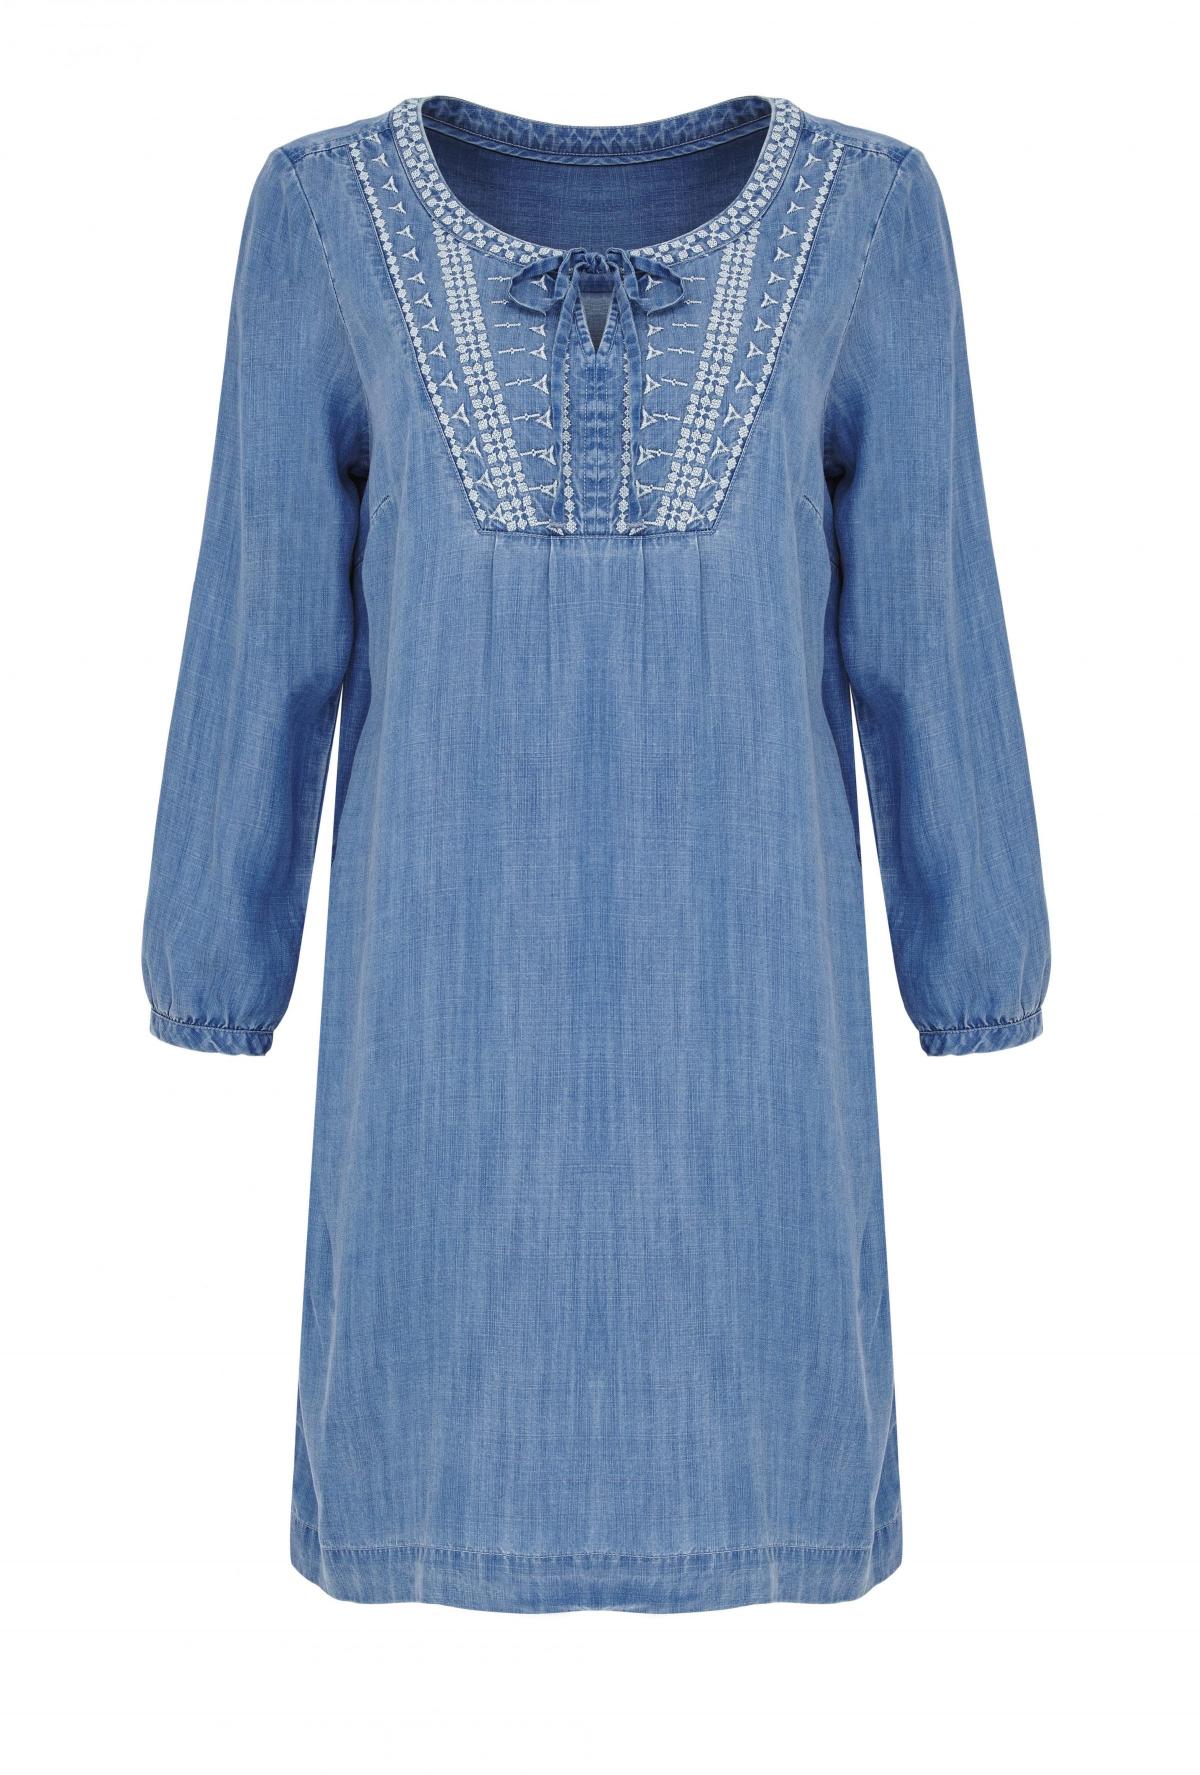 M&S, Indigo dress, £45